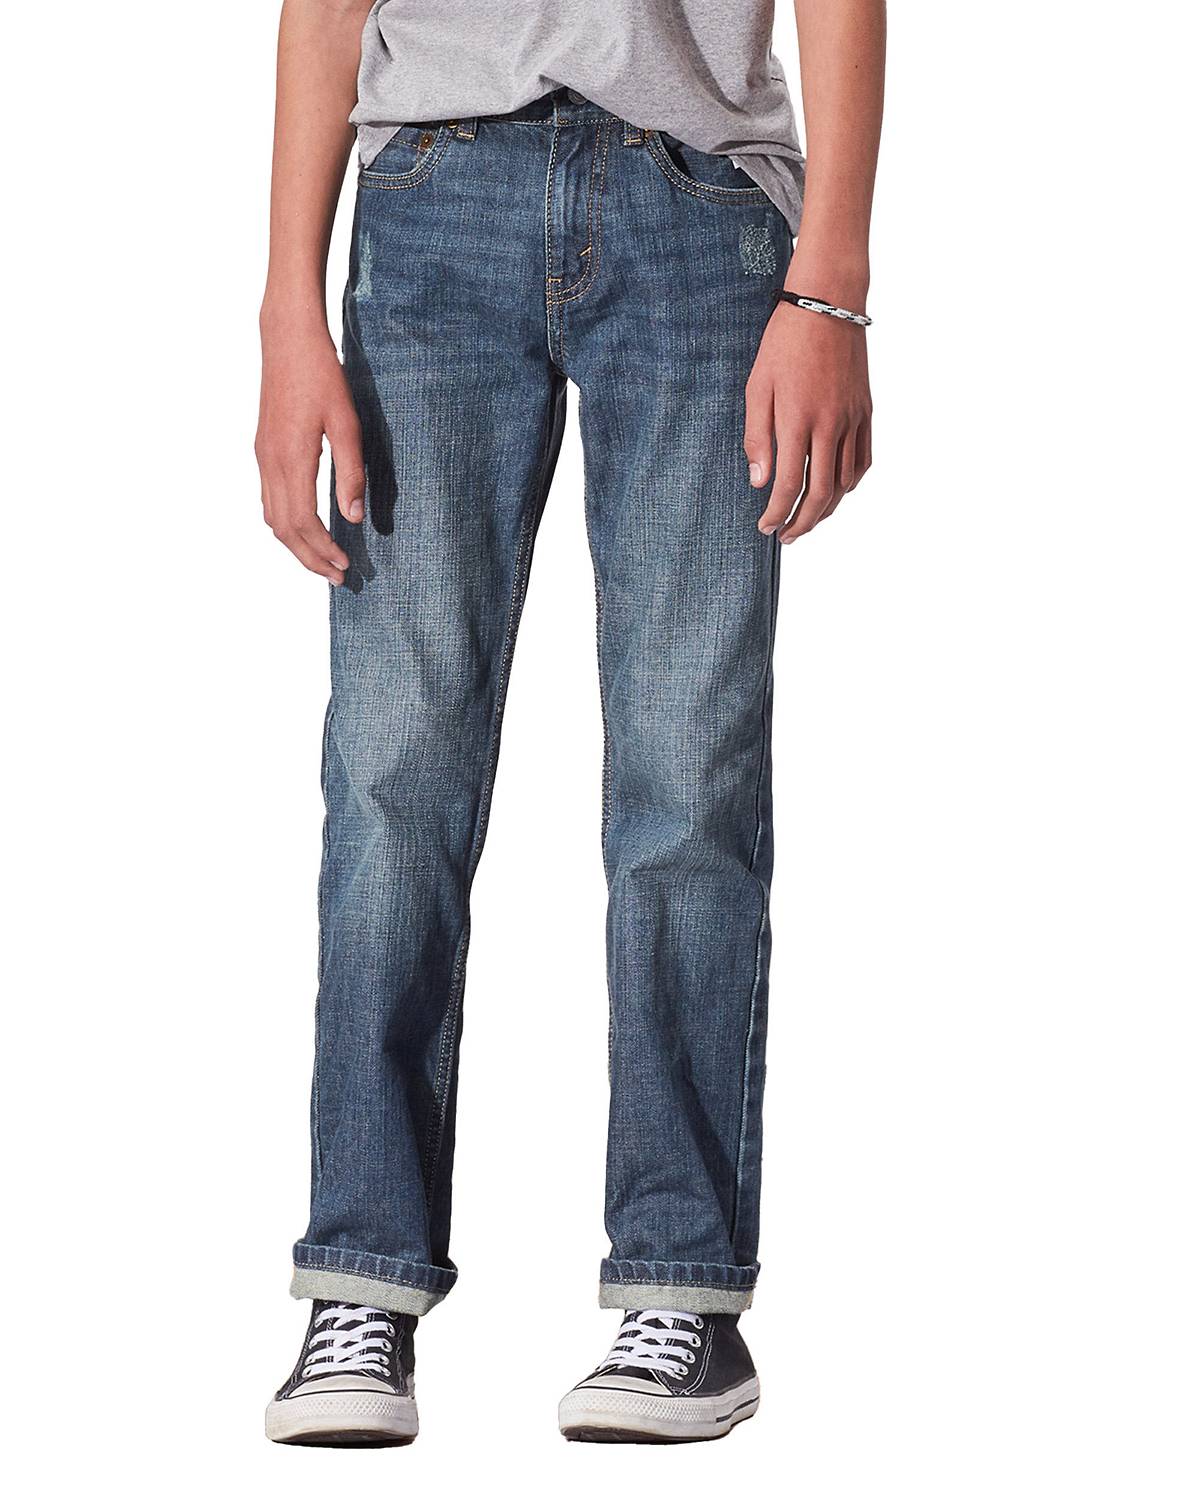 Boy wearing 514™ Straight Fit Jeans